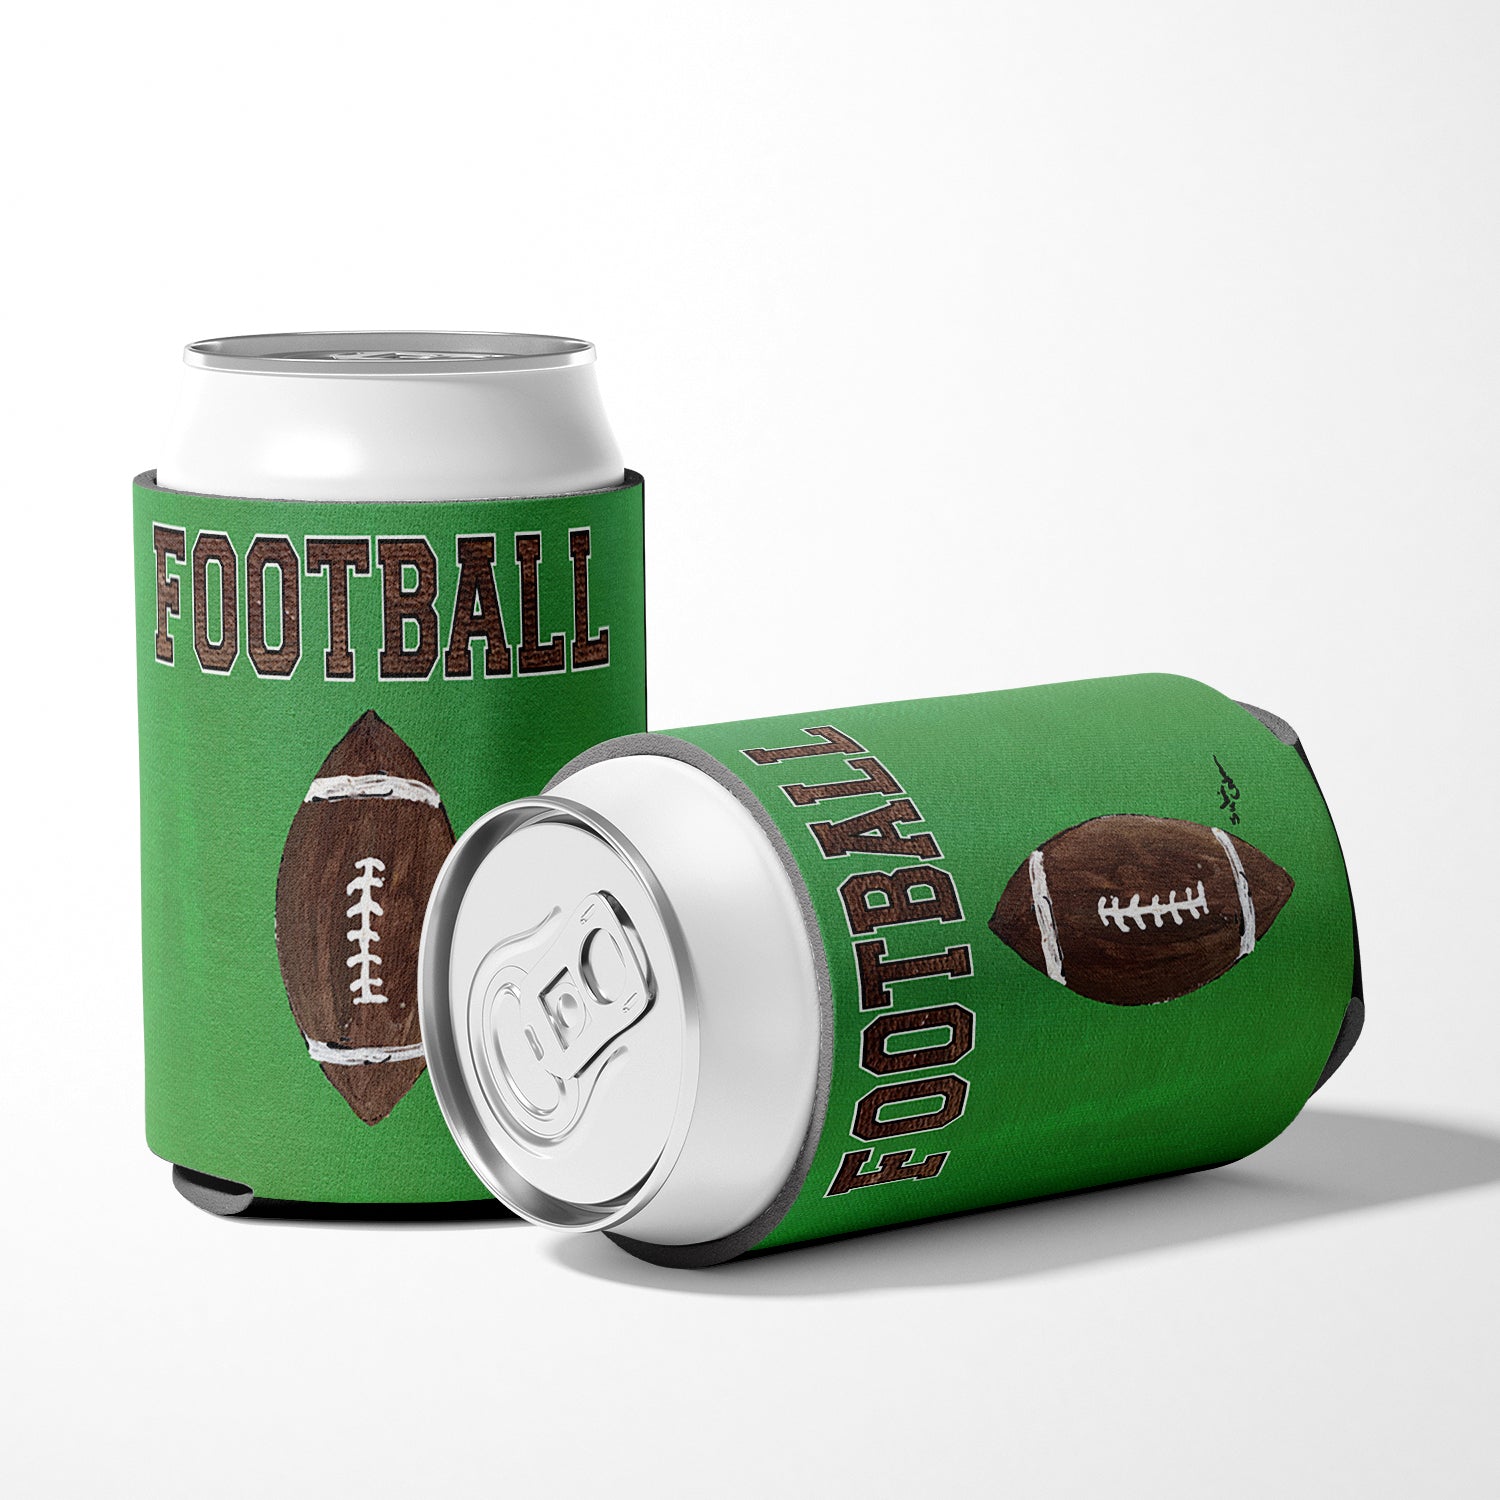 Football Can or Bottle Beverage Insulator Hugger